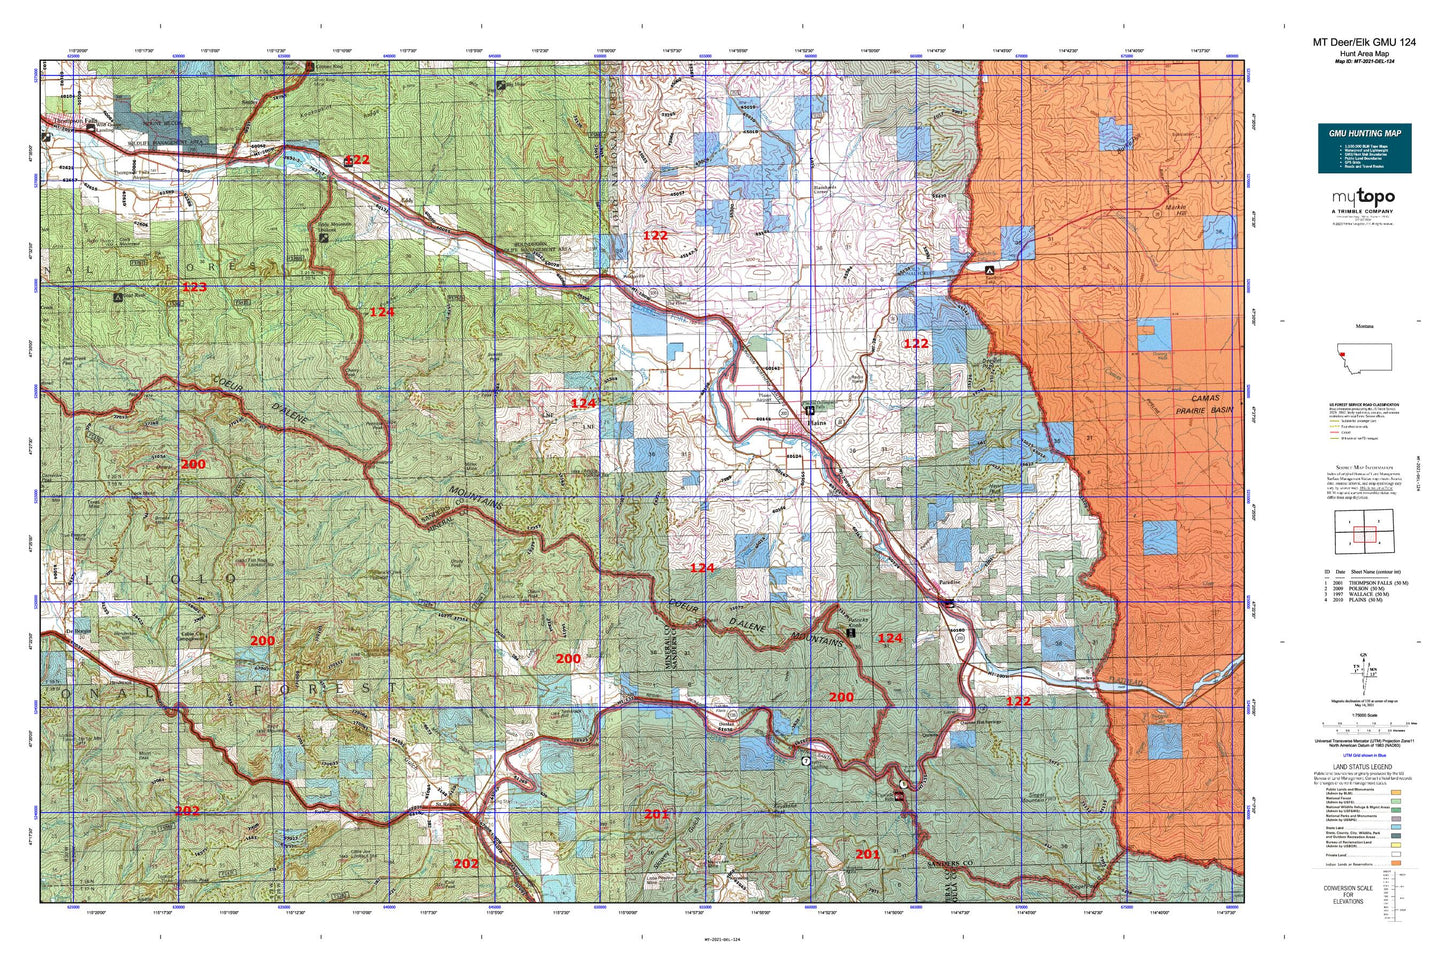 Montana Deer/Elk GMU 124 Map Image